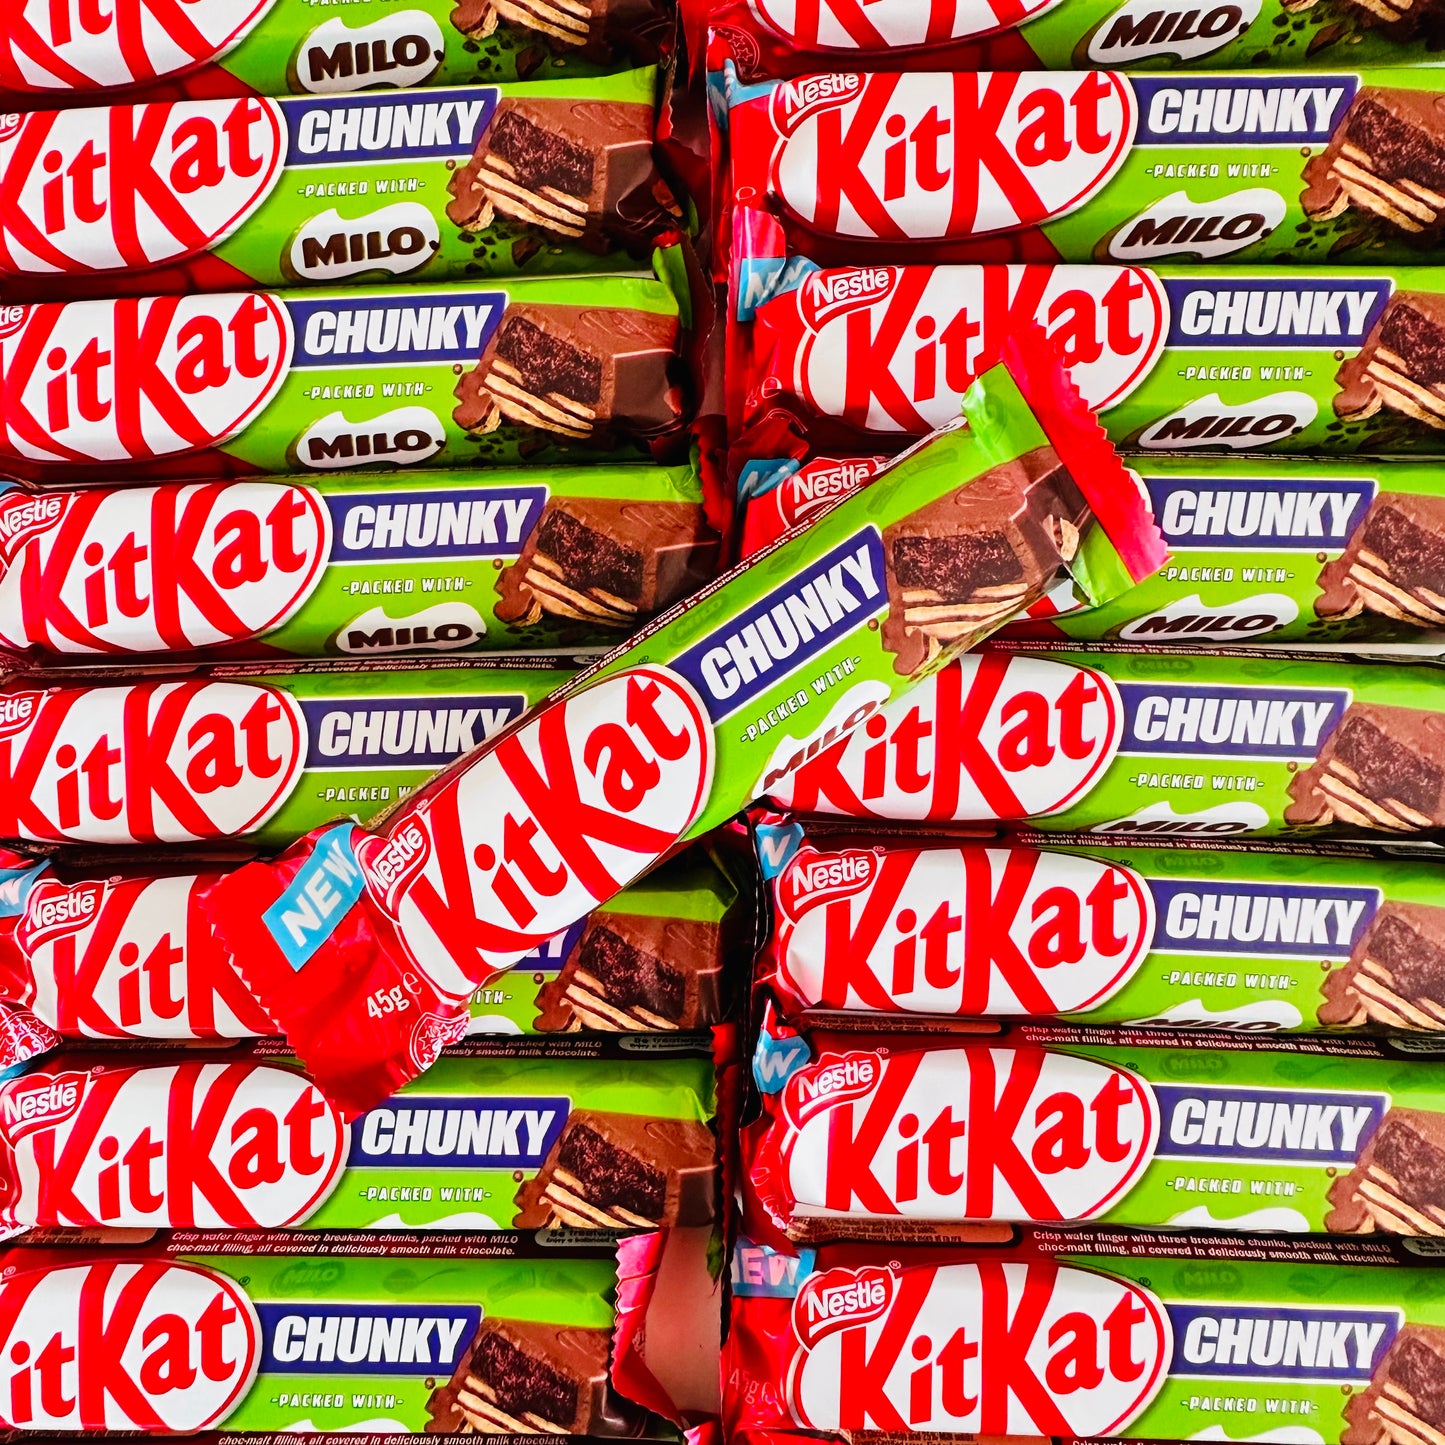 Nestle Kit Kat Chunky Milo Chocolate Bar 45g